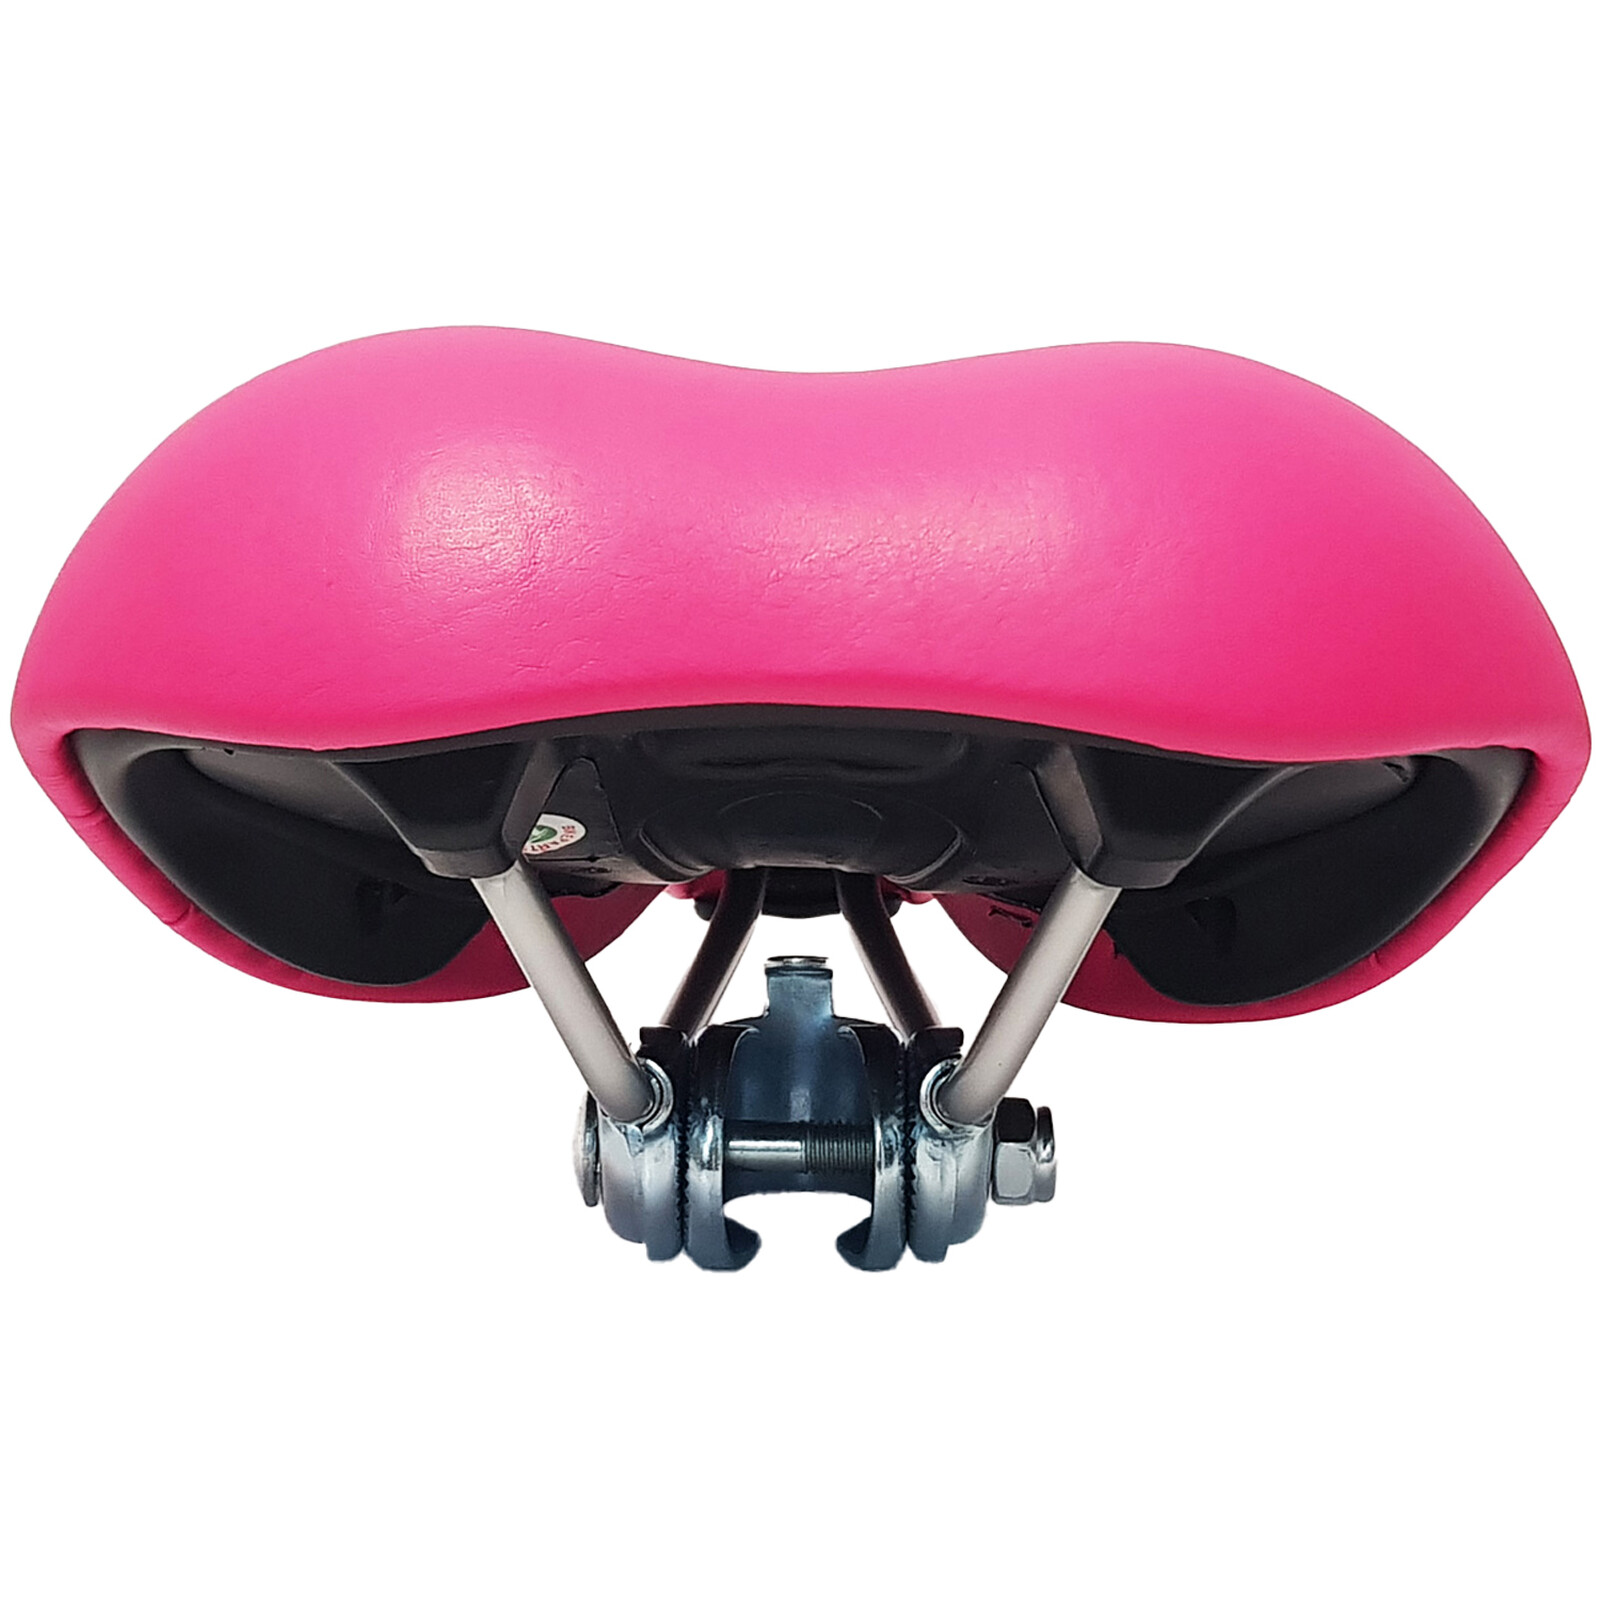 Fahrrad Sattel City Trekking Bike Lady Sitz DDK Beach Cruiser pink inkl Kloben 